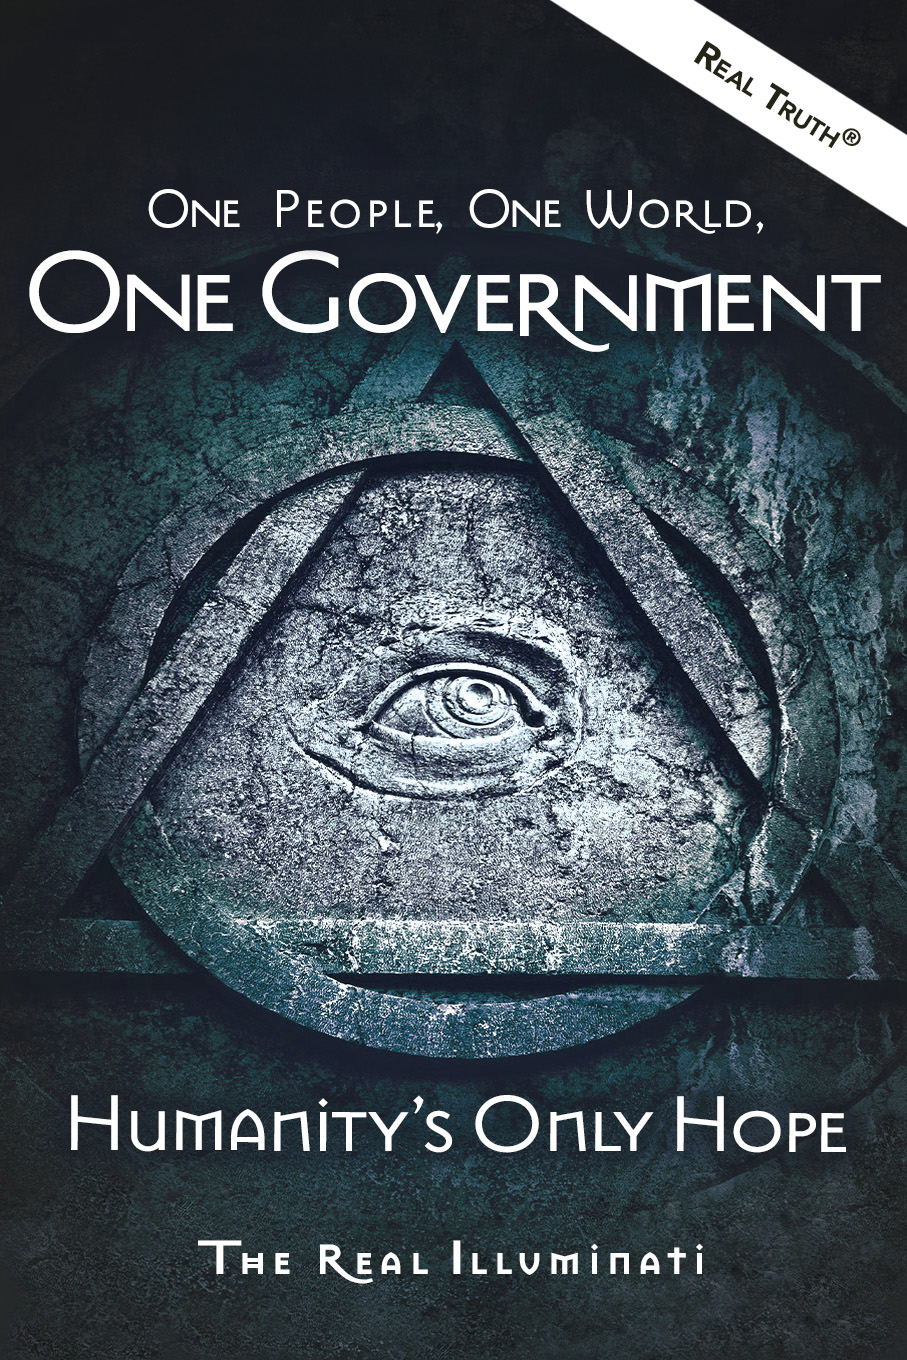 https://realilluminati.org/books/one-people-one-world-one-government/